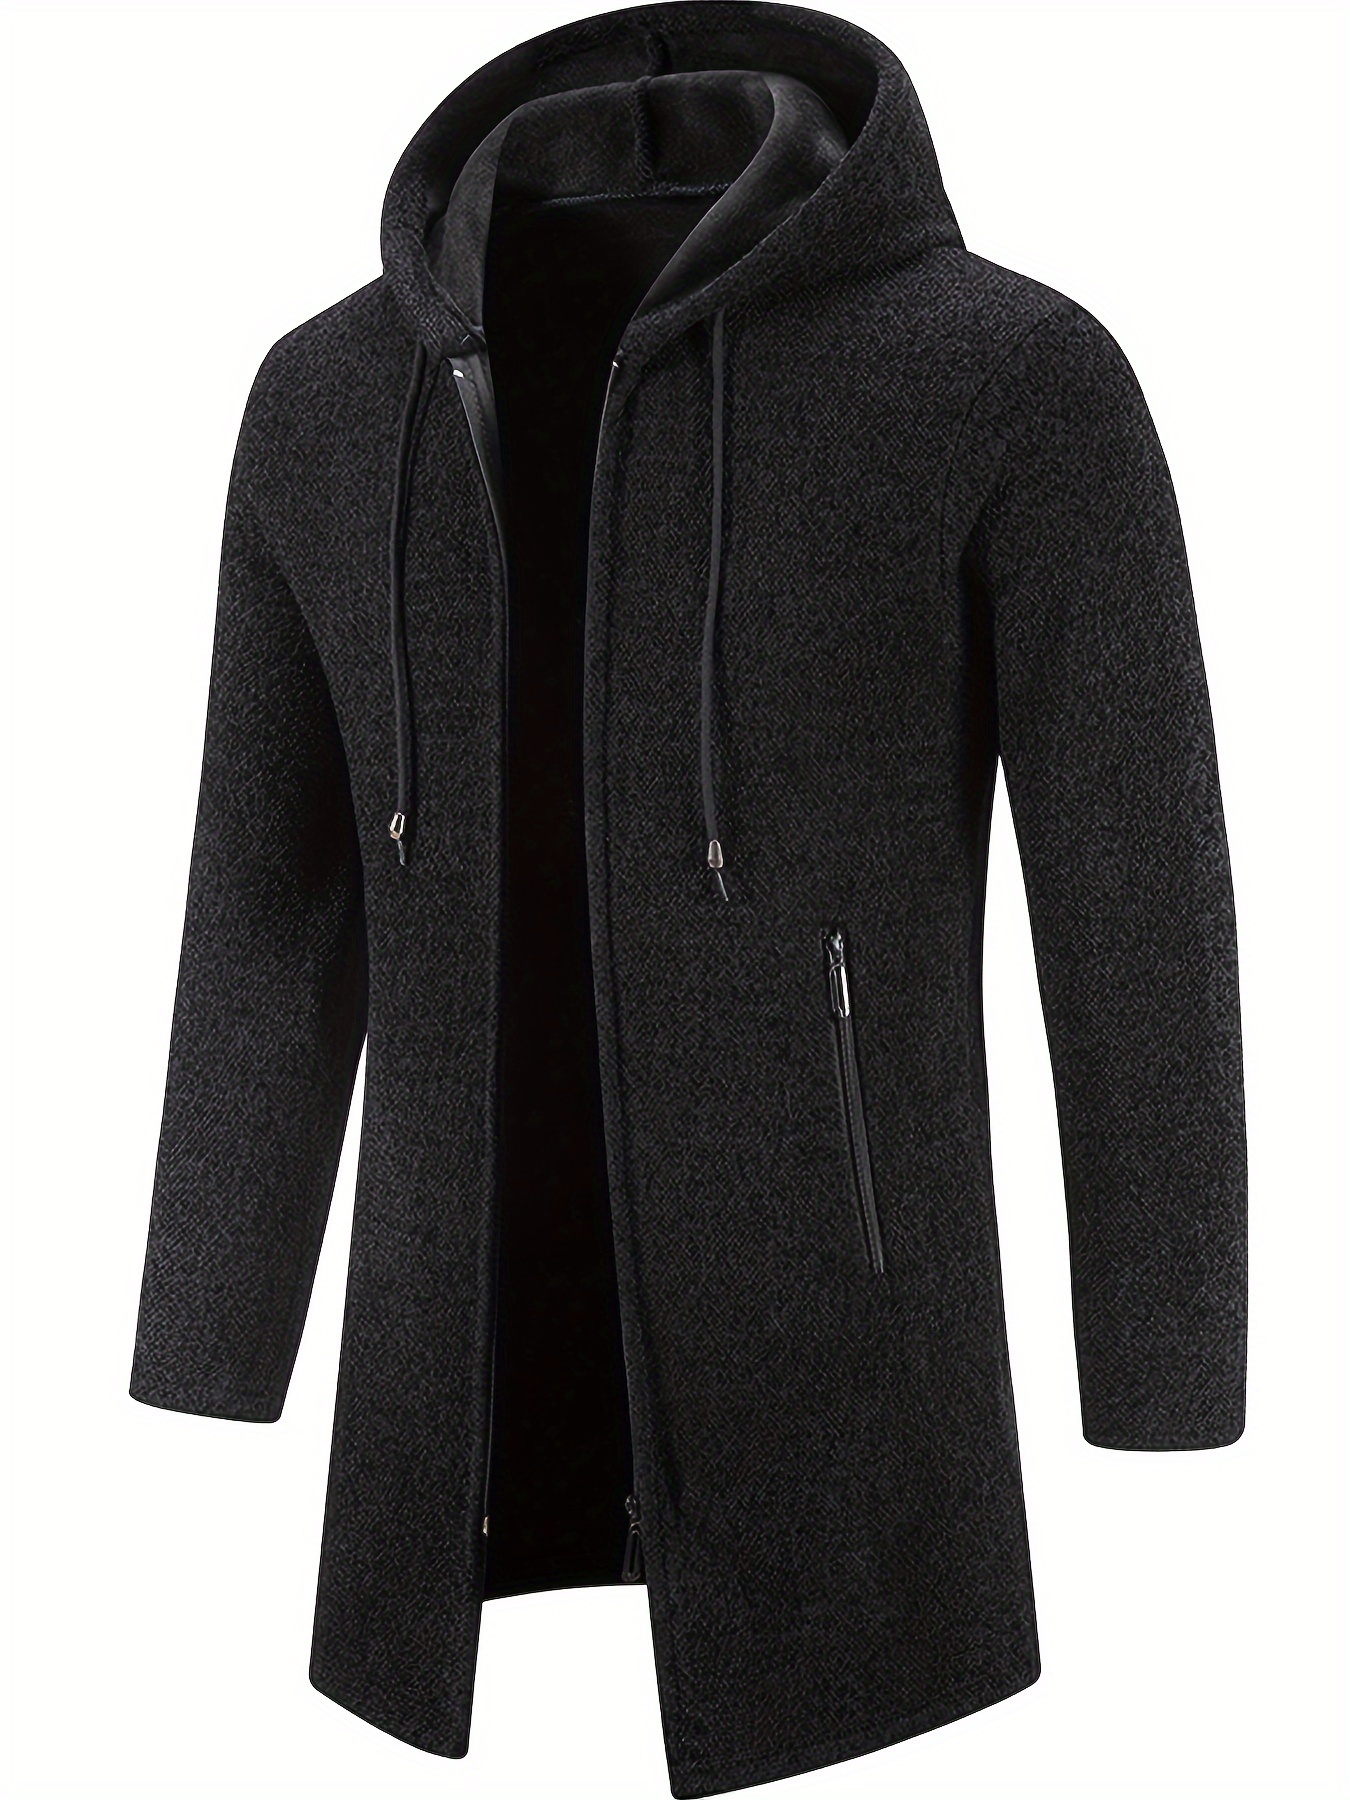 Chaqueta con capucha y cremallera completa para hombre, ropa de invierno  para exteriores, abrigos cálidos de manga larga con bolsillos